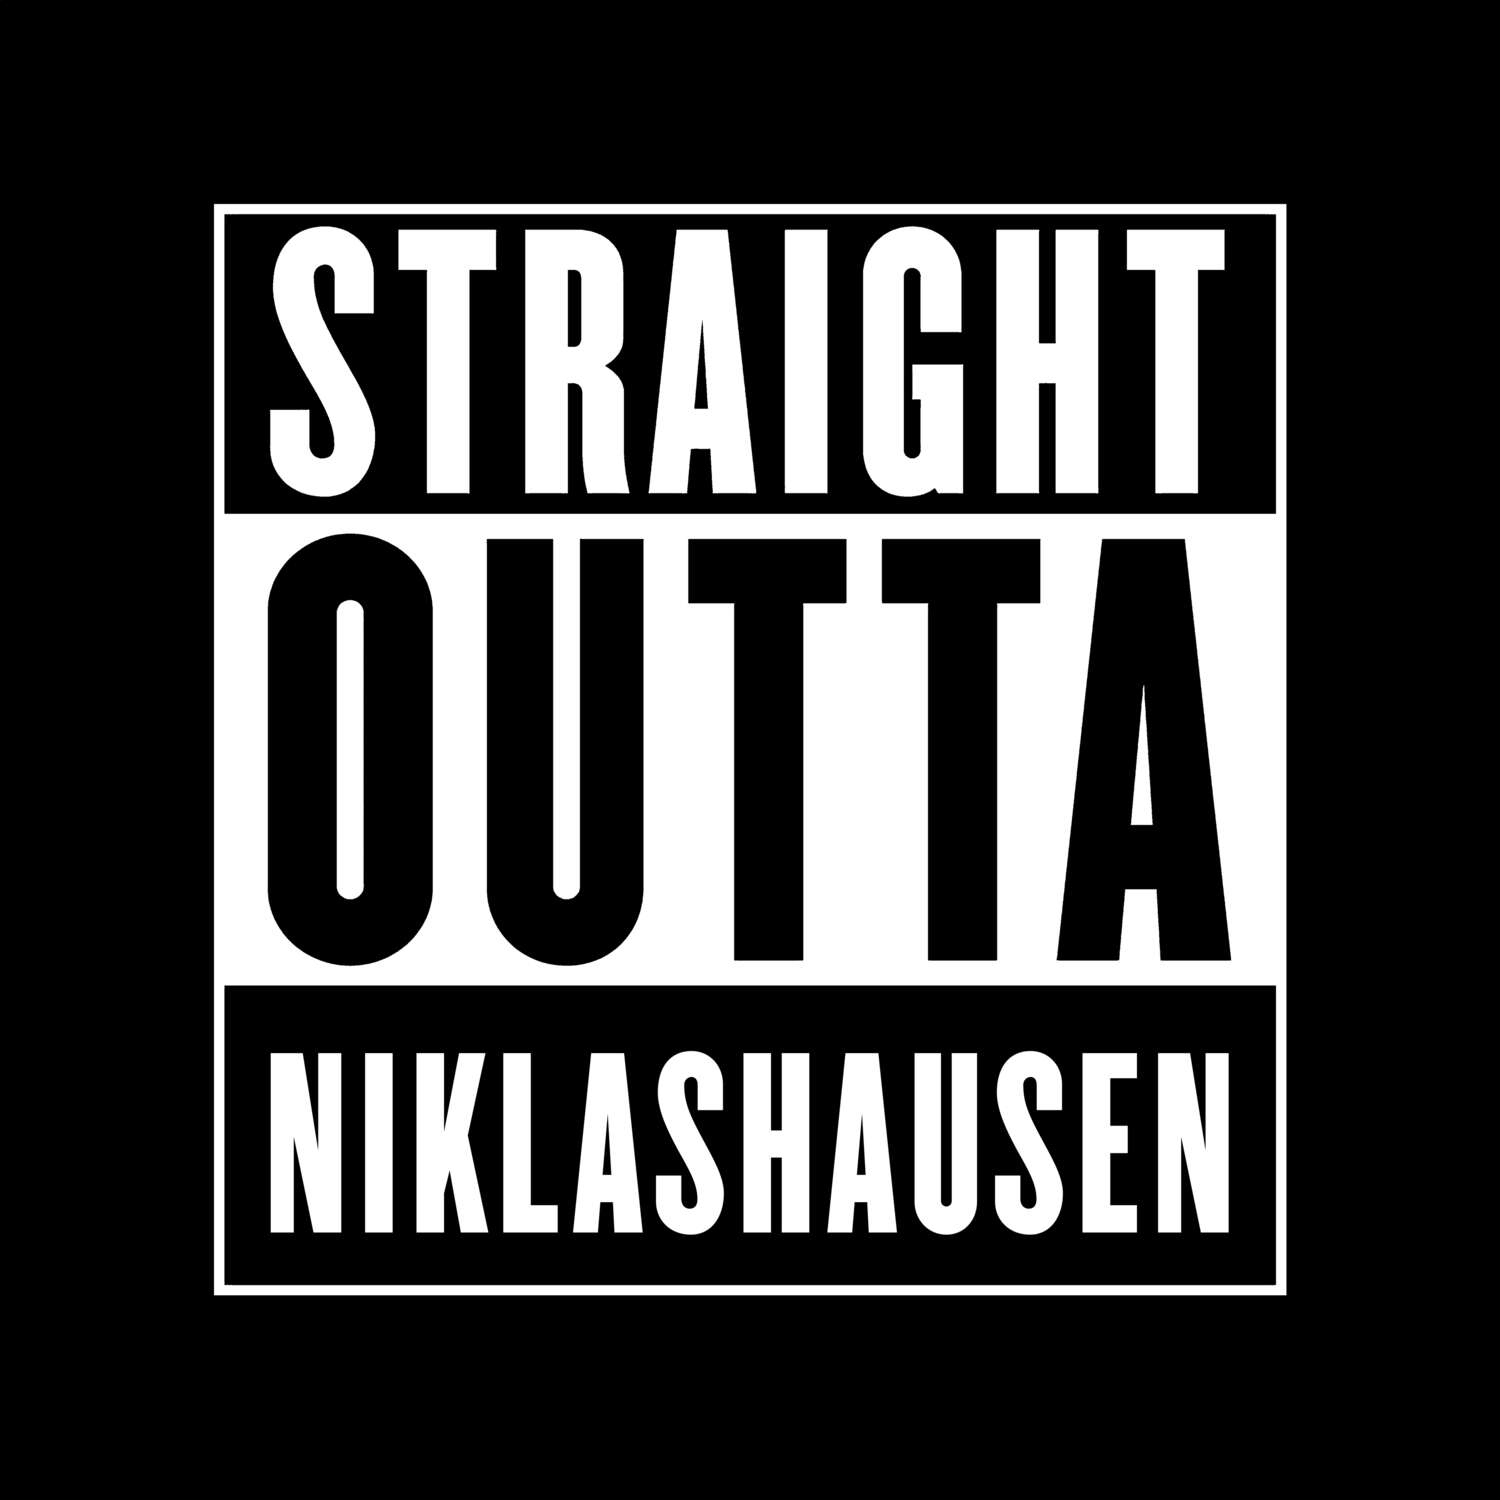 Niklashausen T-Shirt »Straight Outta«